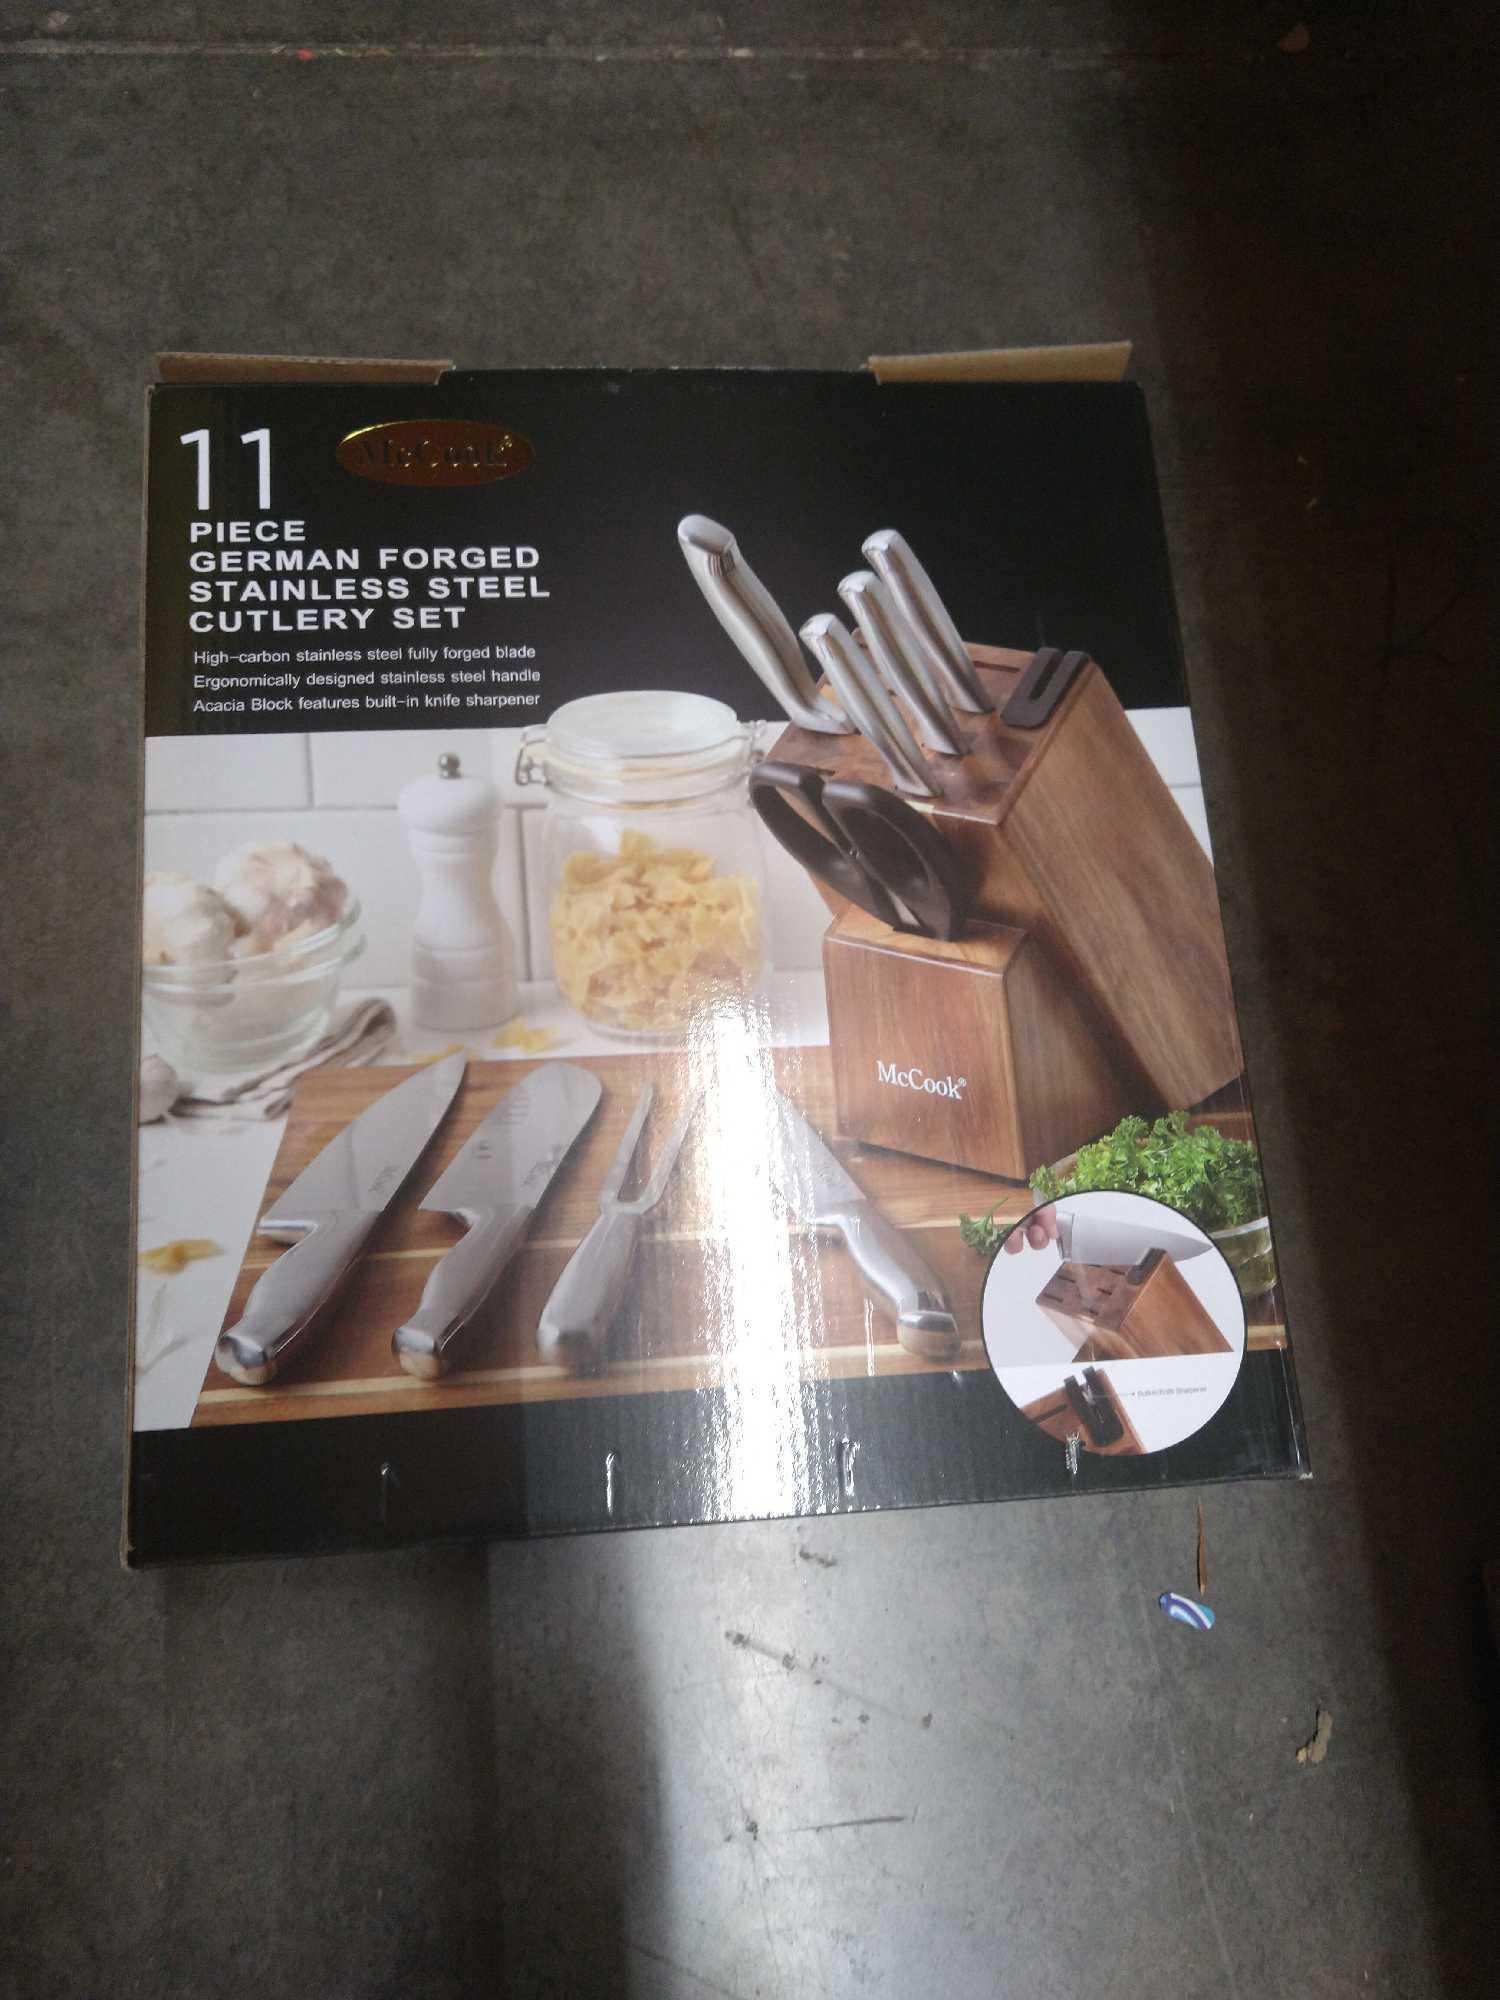 McCook German Stainless Steel Kitchen Knife Block Sets with Built-in Sharpener, $69.98 MSRP